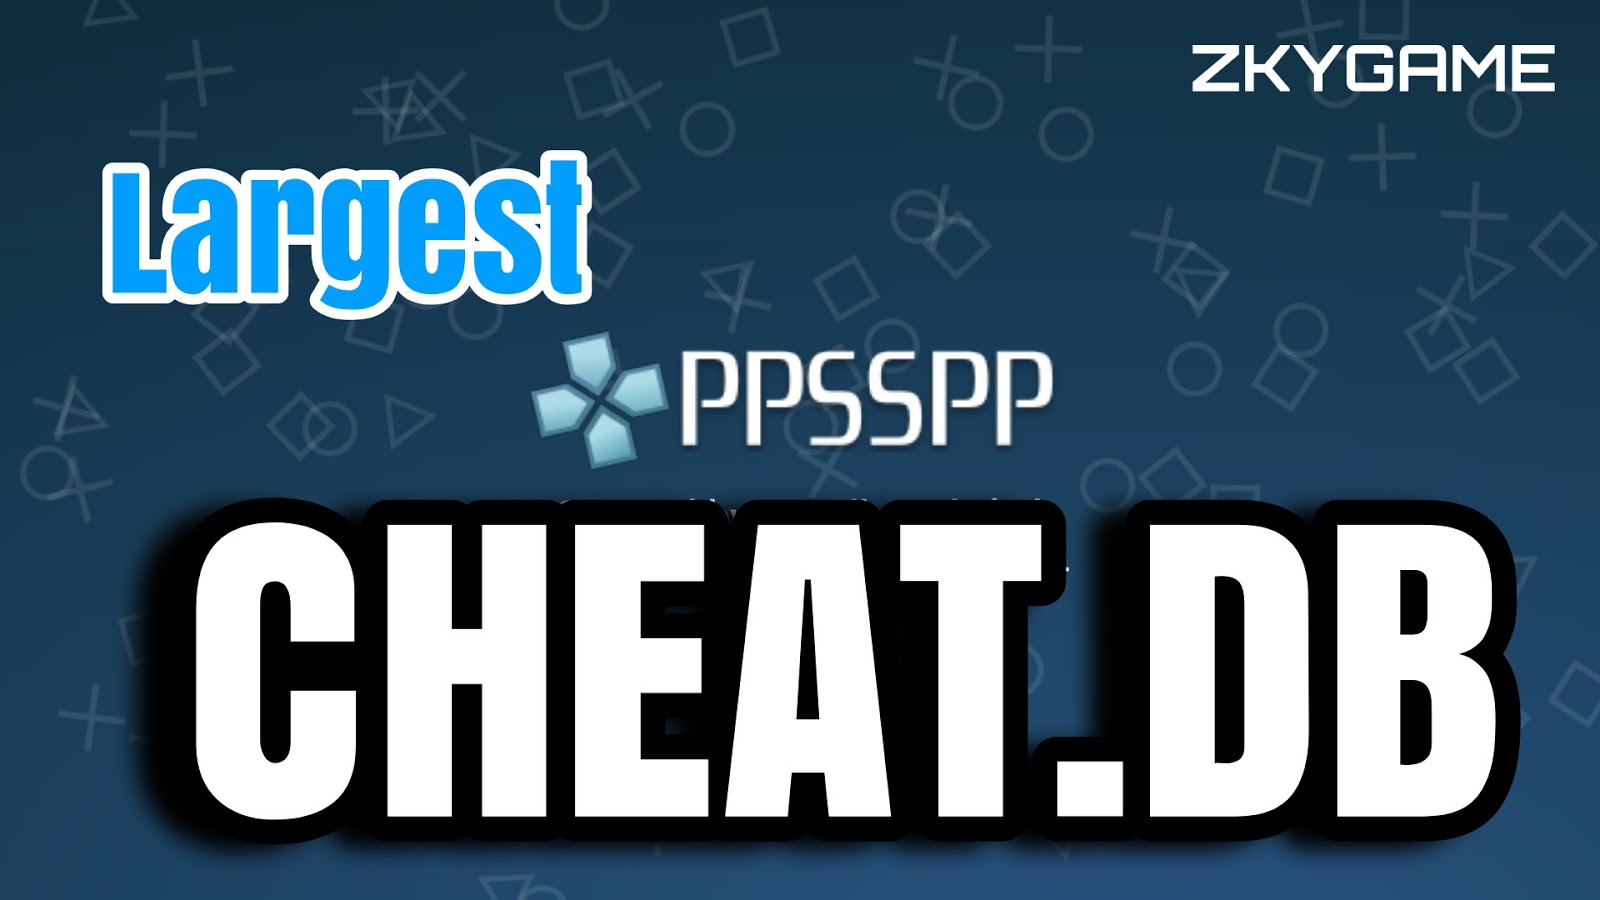 ppsspp cheatdb 2016